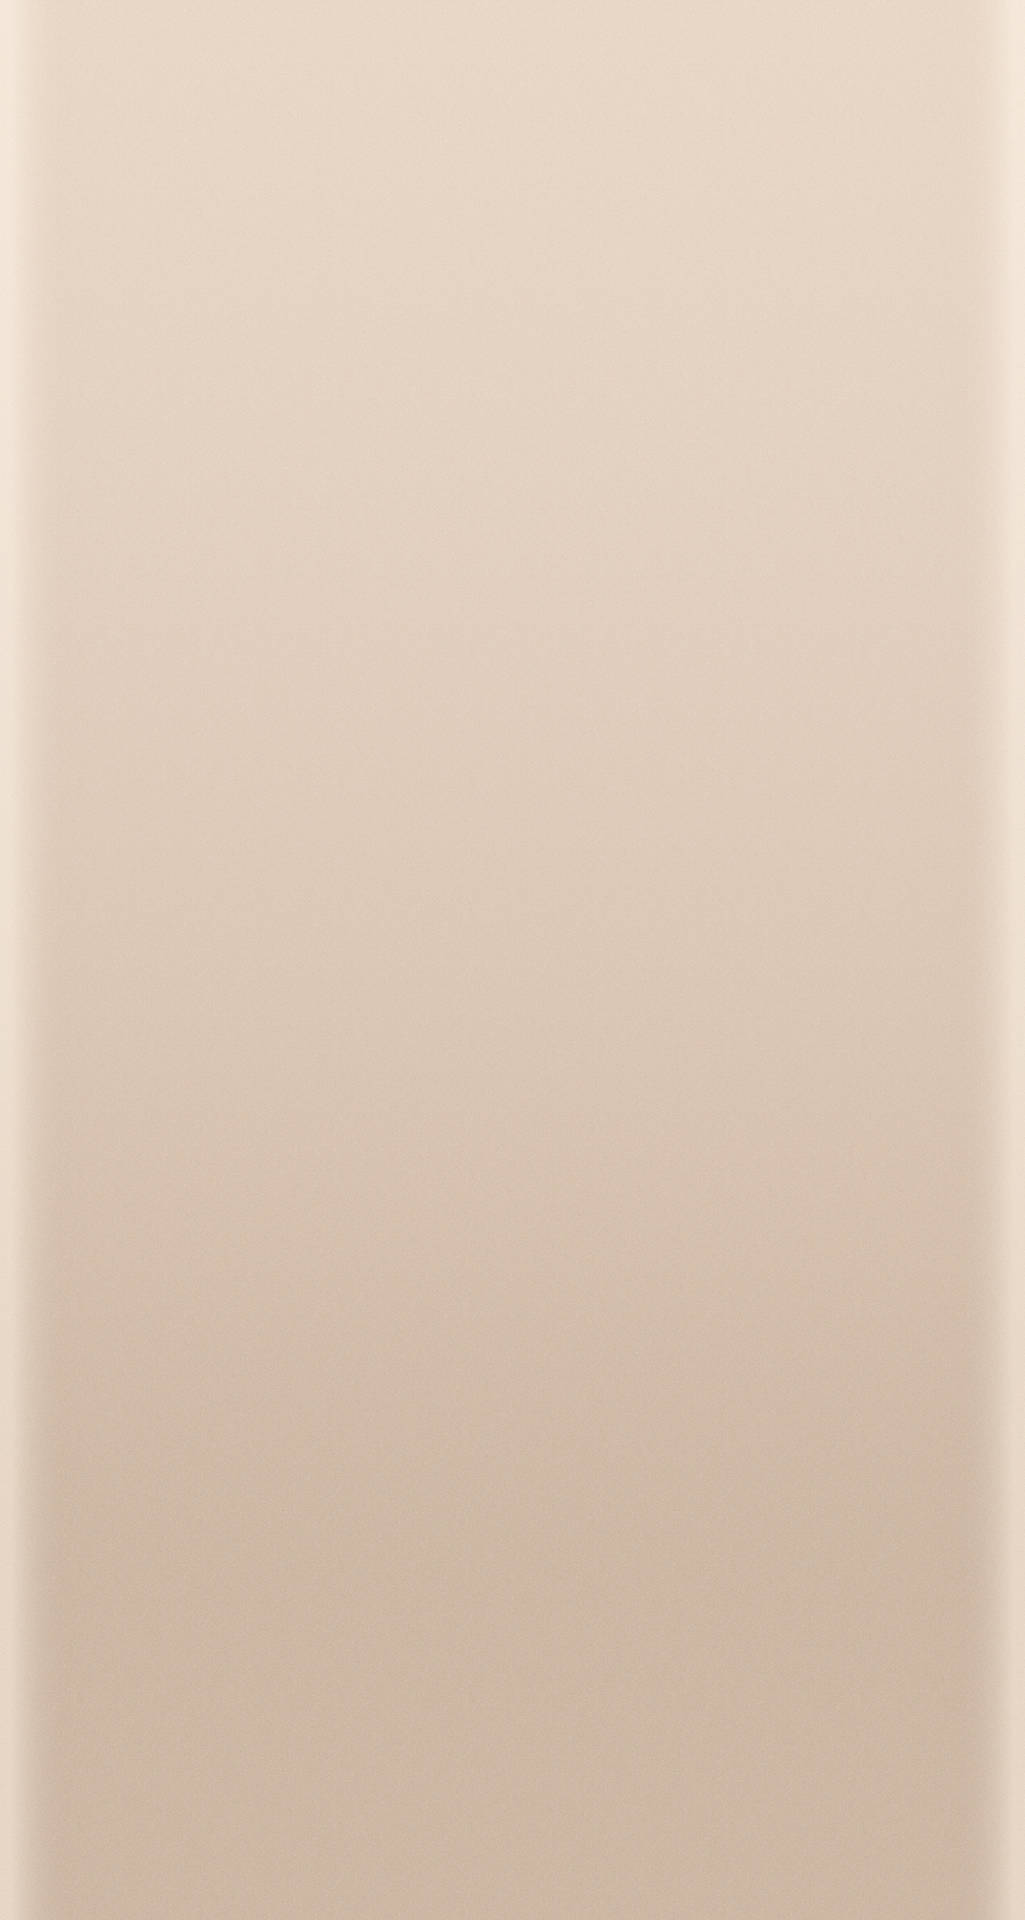 Beige Plain Iphone Wallpaper